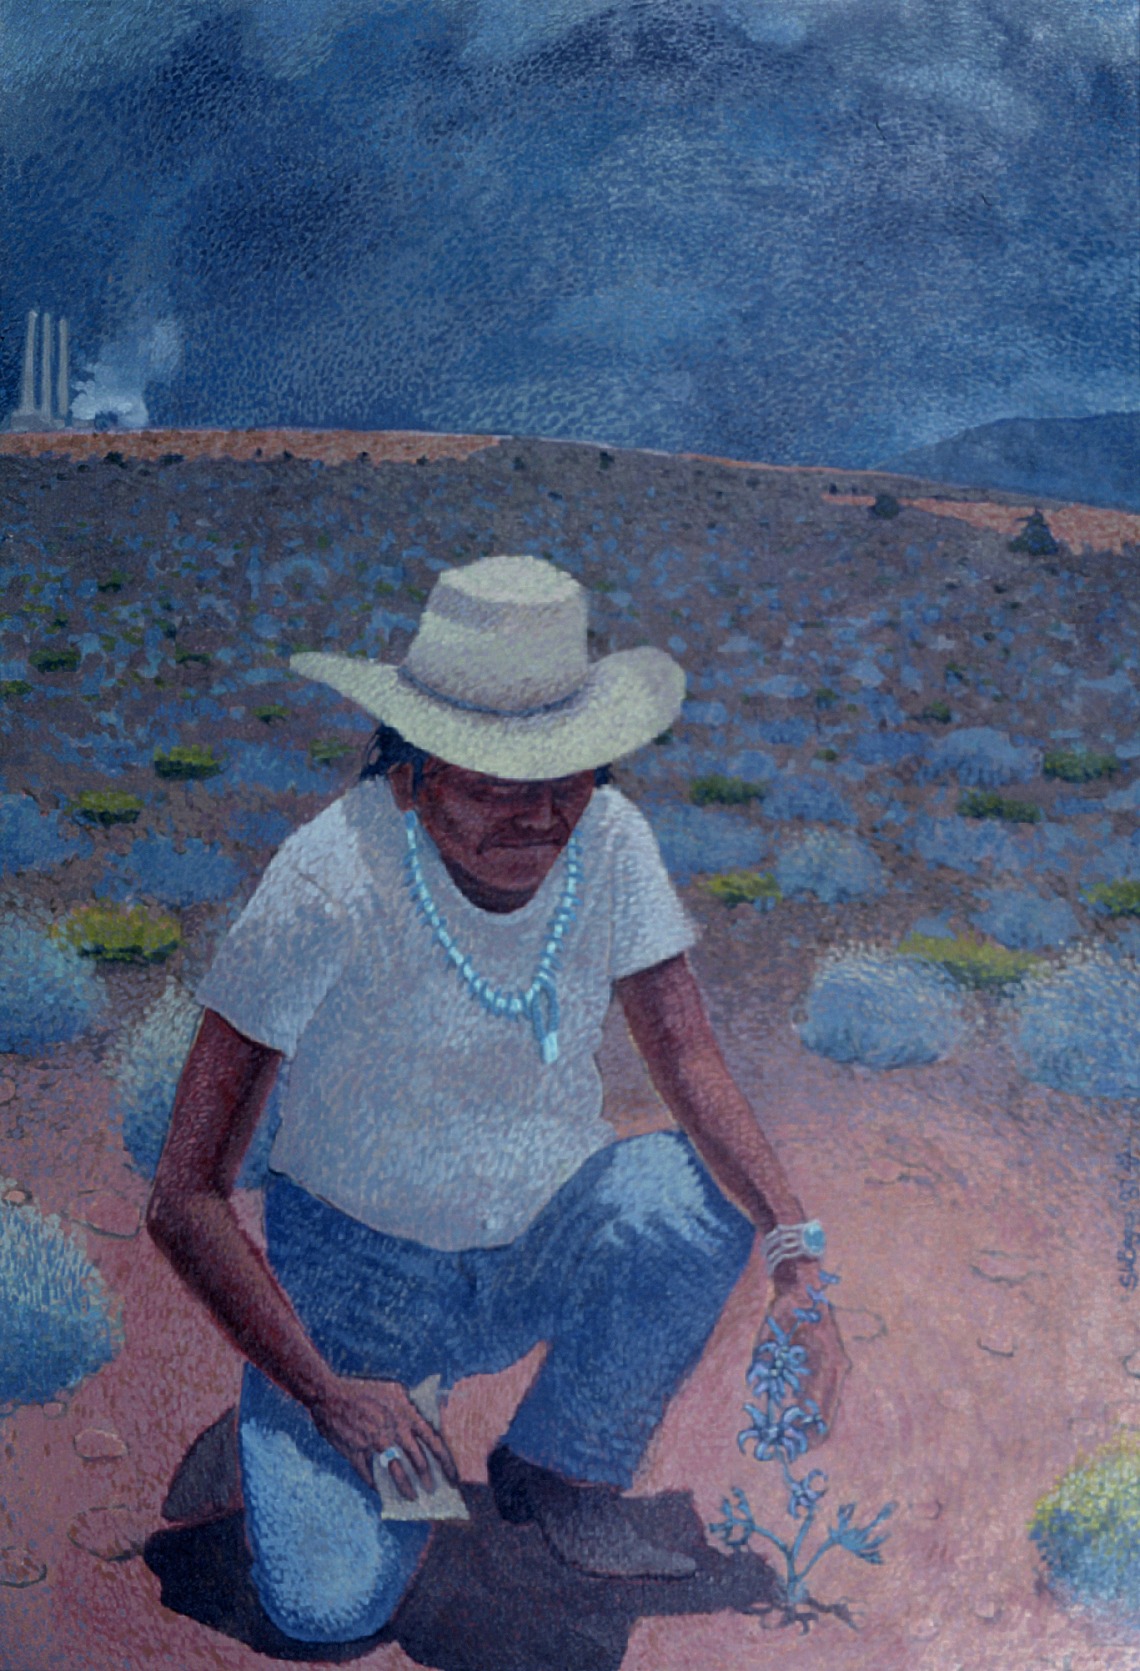 Navajo Power Plant (1990) by Shonto W. Begay